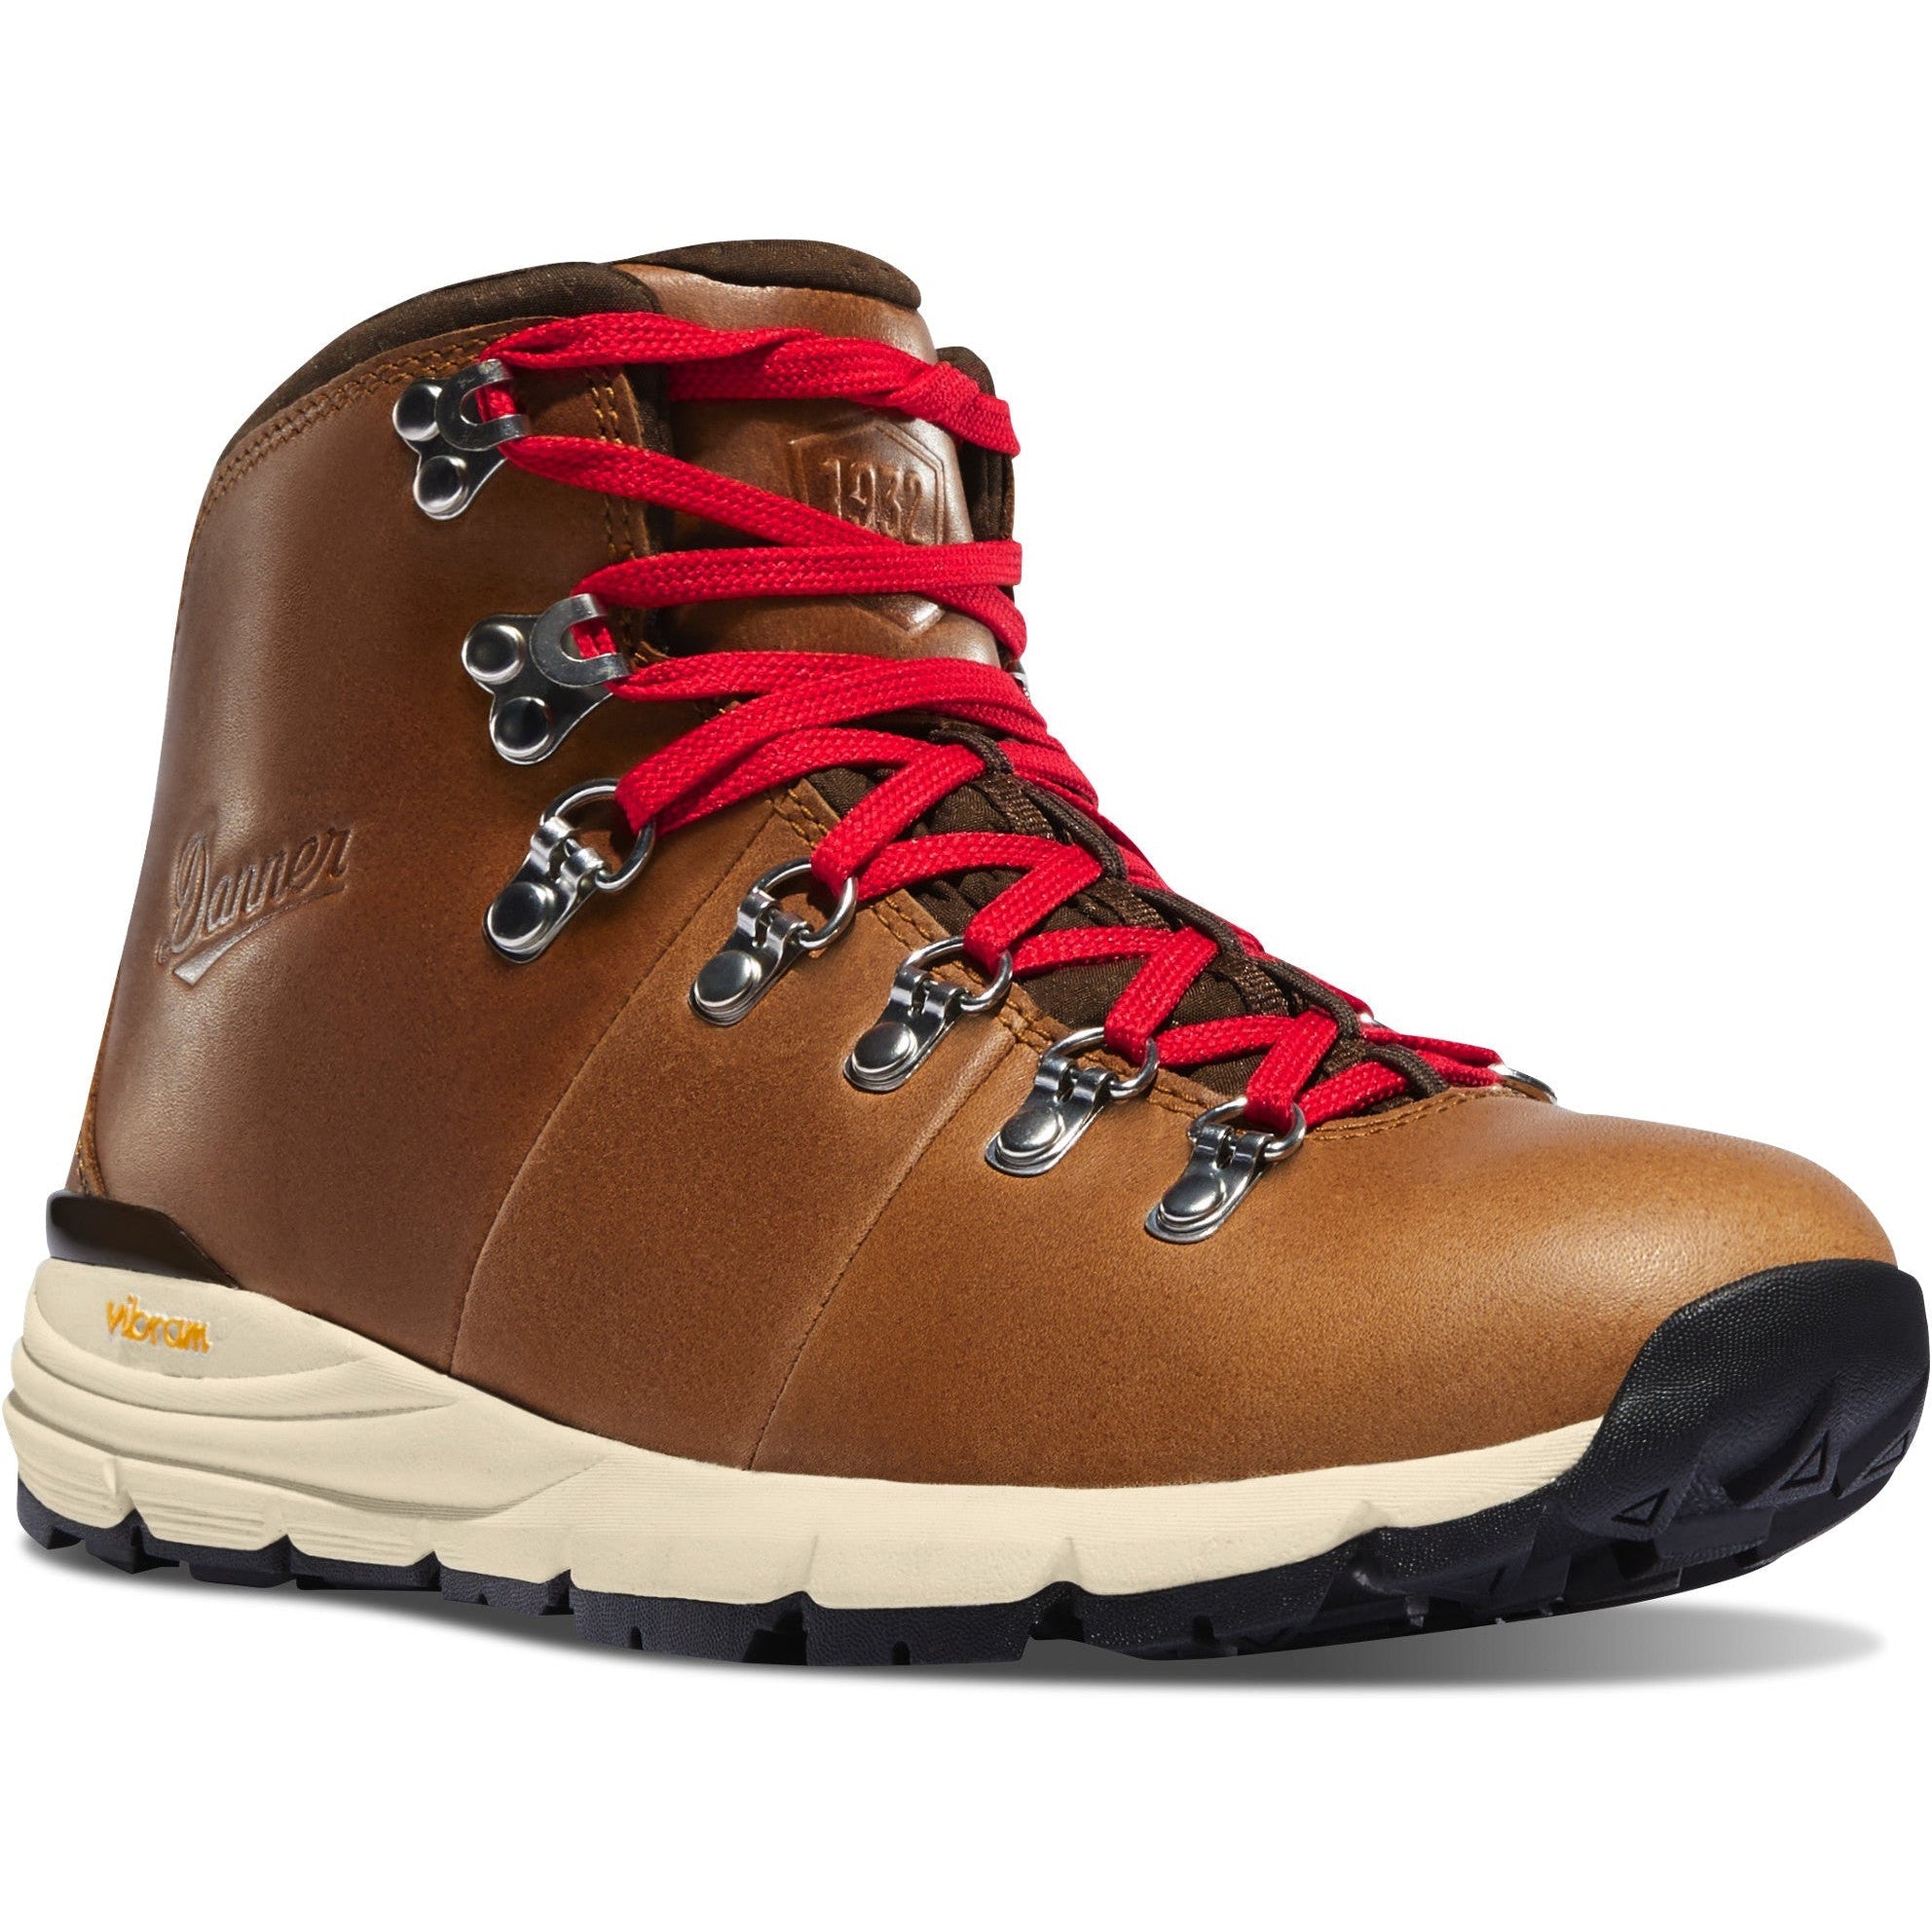 Danner Women's Mountain 600 4.5" WP Hiking Boot - Saddle Tan - 62259 5.5 / Medium / Tan - Overlook Boots